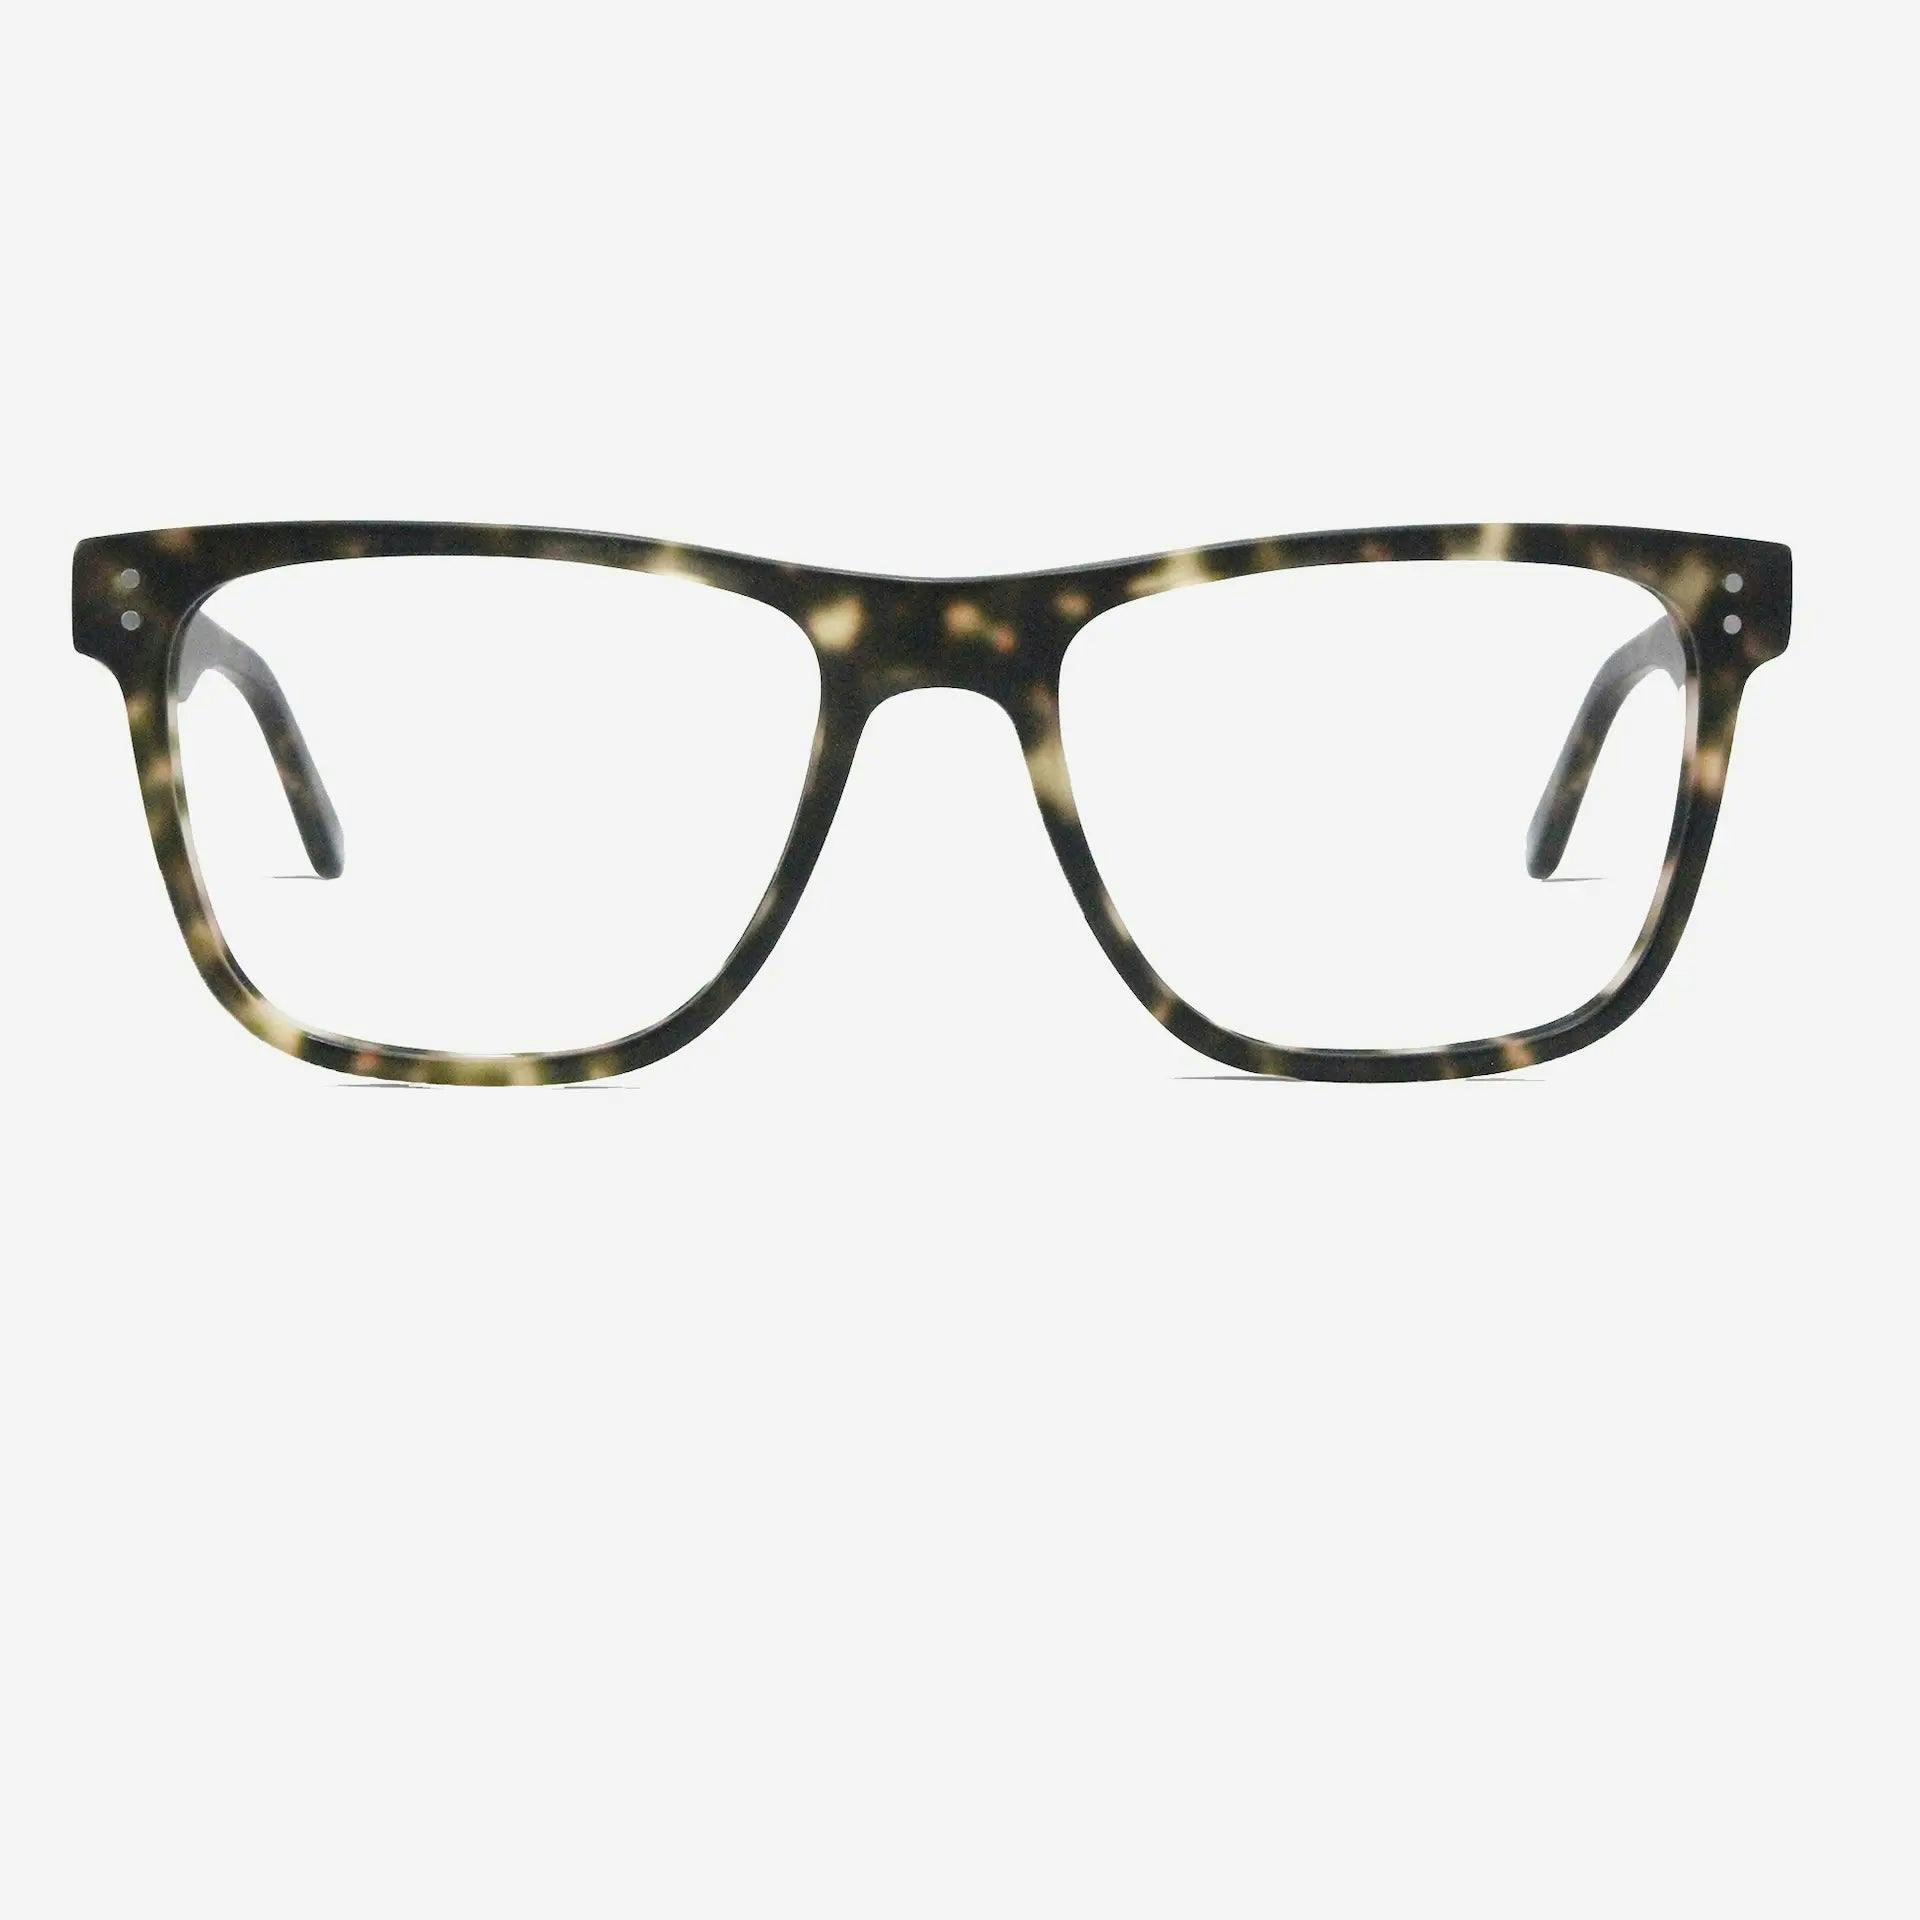 Huxley glasses | Catalan Tortoise 